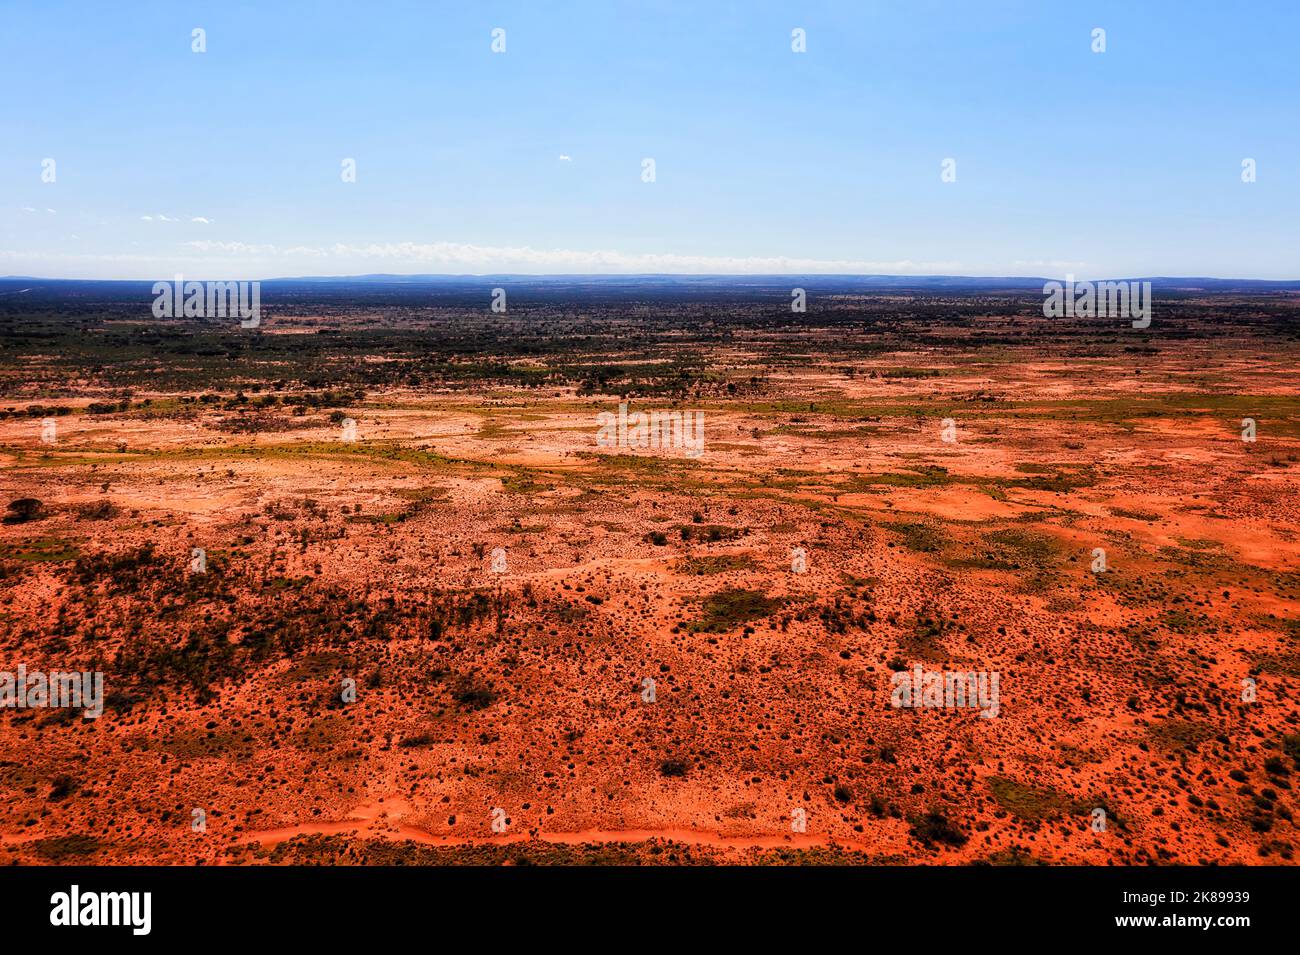 Endless plains of red soil semi-desert outback of Australia around Broken hill city on Barrier highway - aerial landscape. Stock Photo